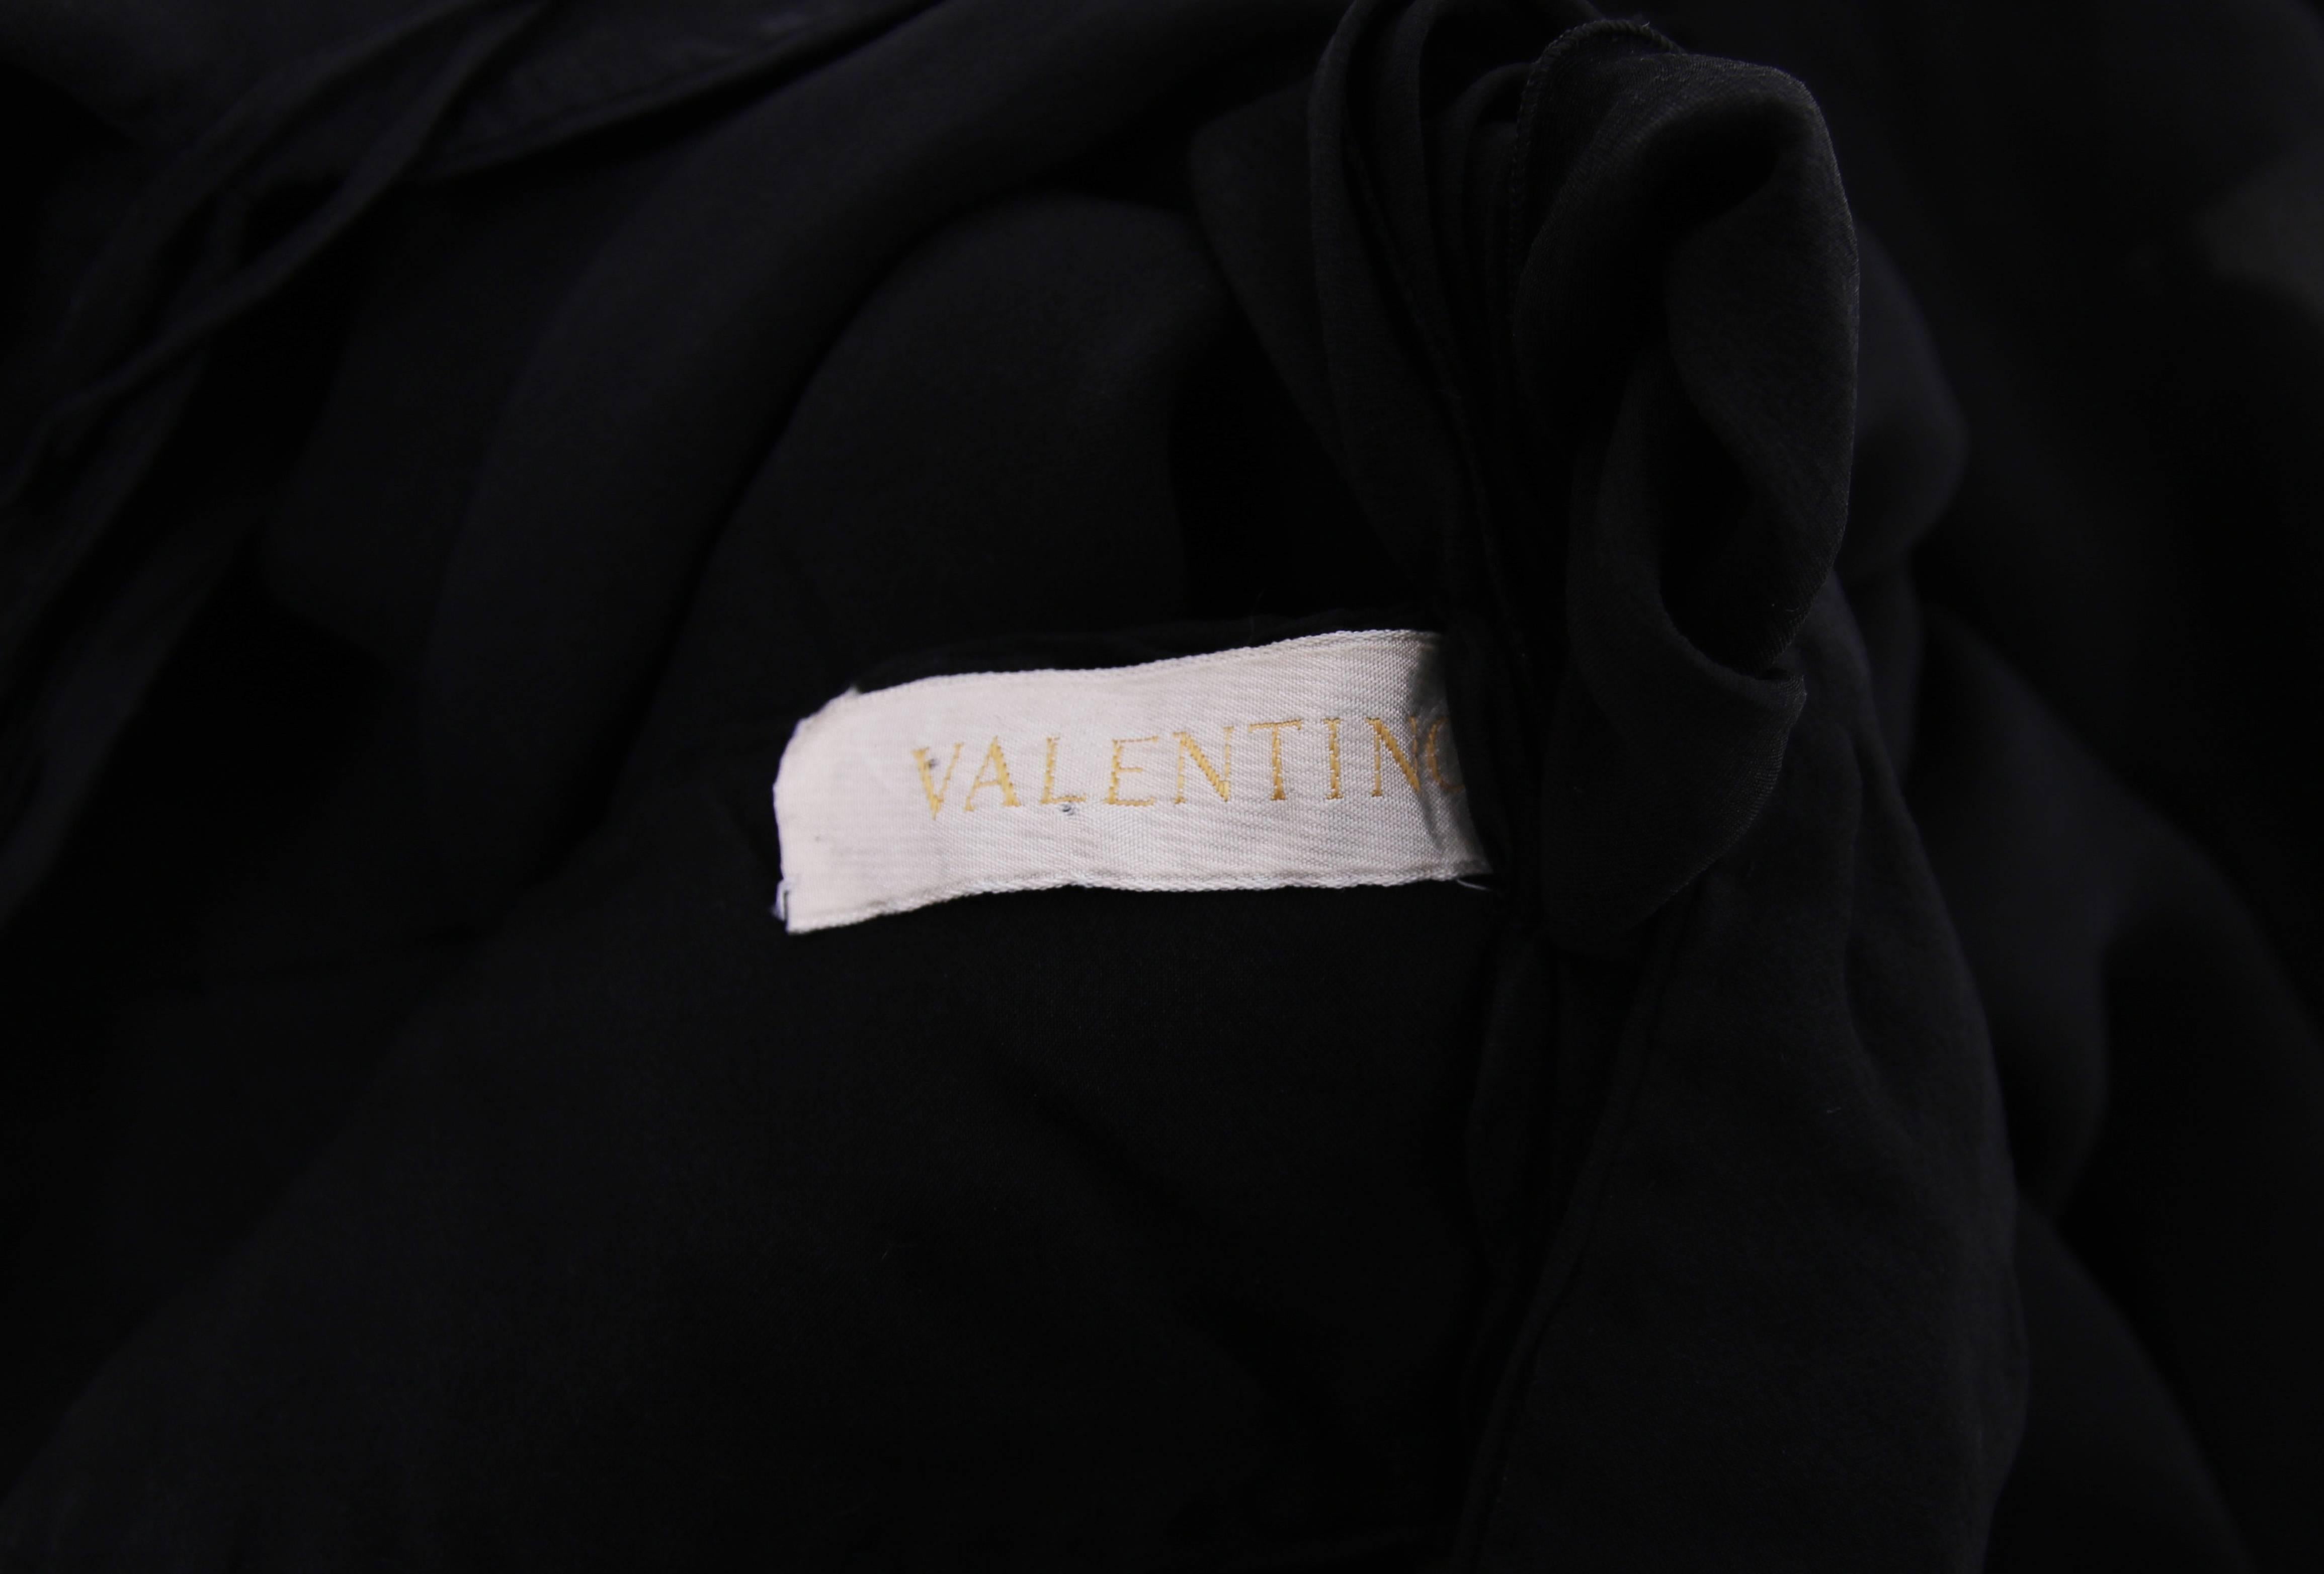 Valentino Black Silk Chiffon Multi-Layered Cocktail Dress Bodice Cut Outs, 2007 In Excellent Condition For Sale In Studio City, CA